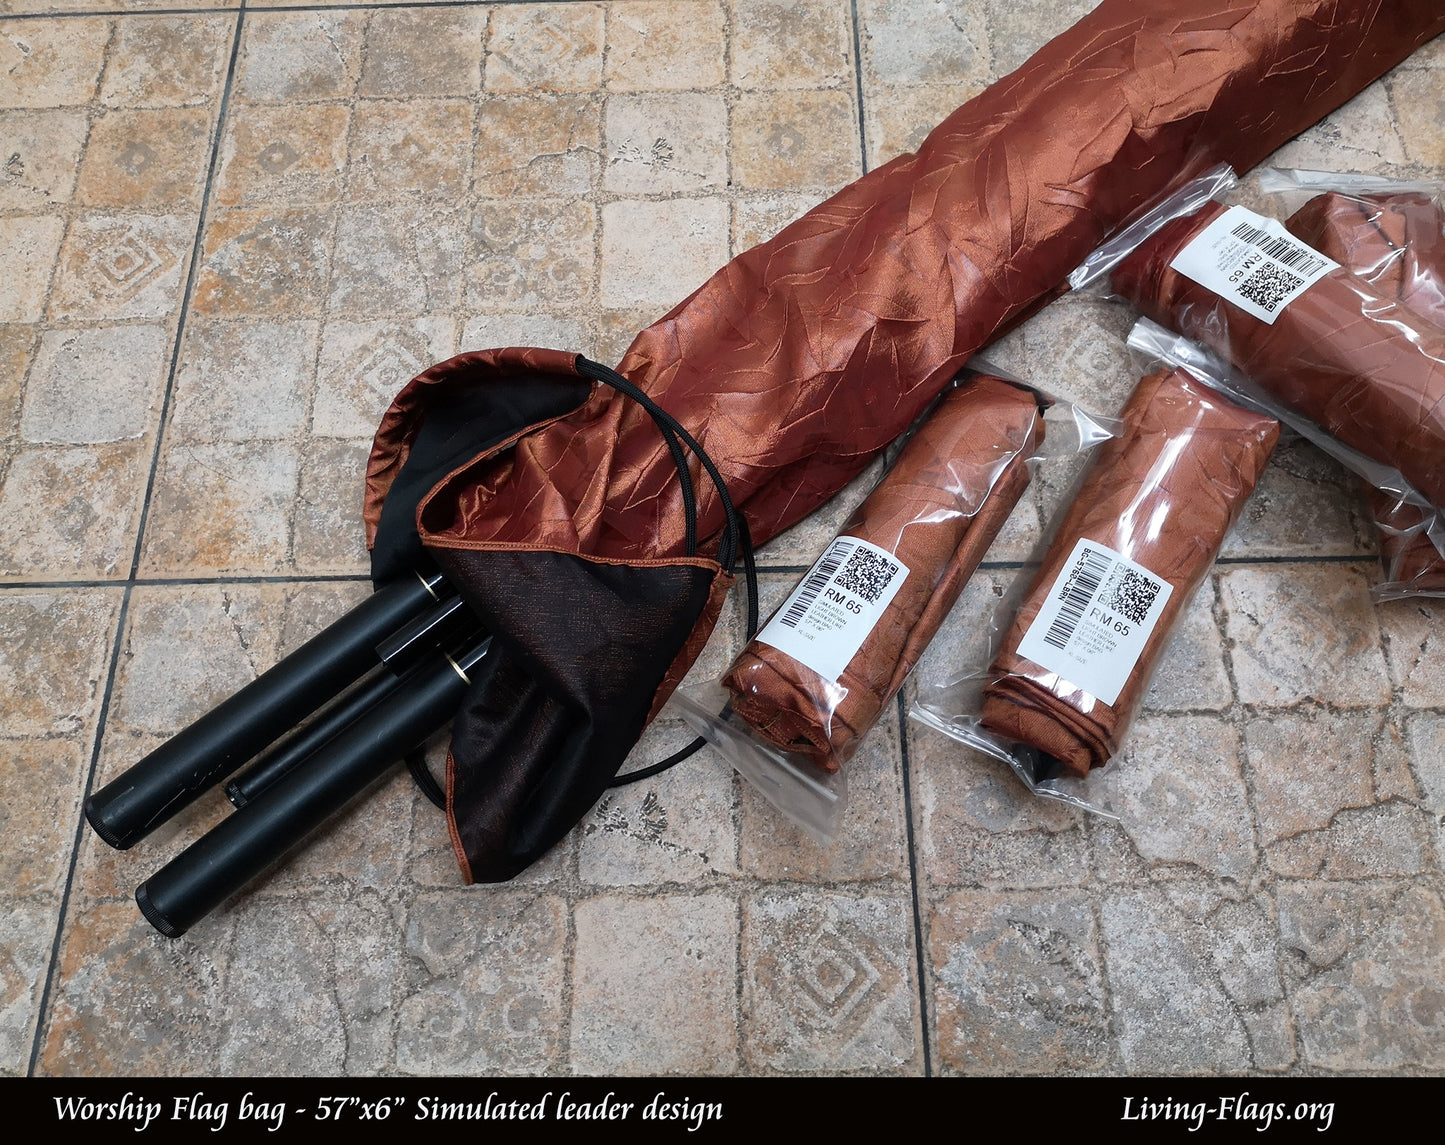 Worship Flag Bag 57"x 6" - Light Brown simulated Leather Design